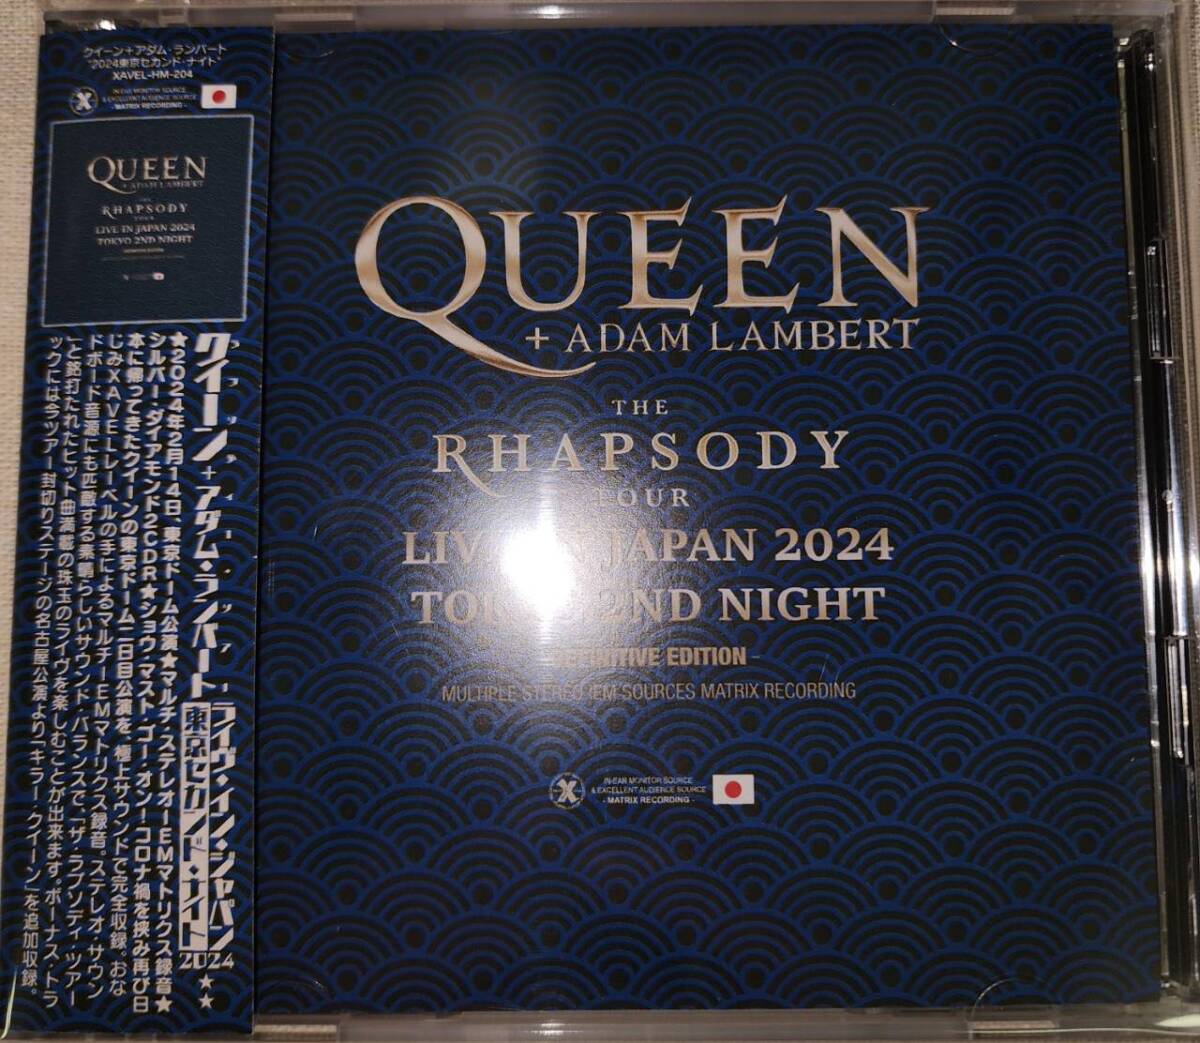 Queen + Adam Lambert (2CD) The Rhapsody Tour Live in Japan 2024 Tokyo 2nd Night 通常盤_画像1